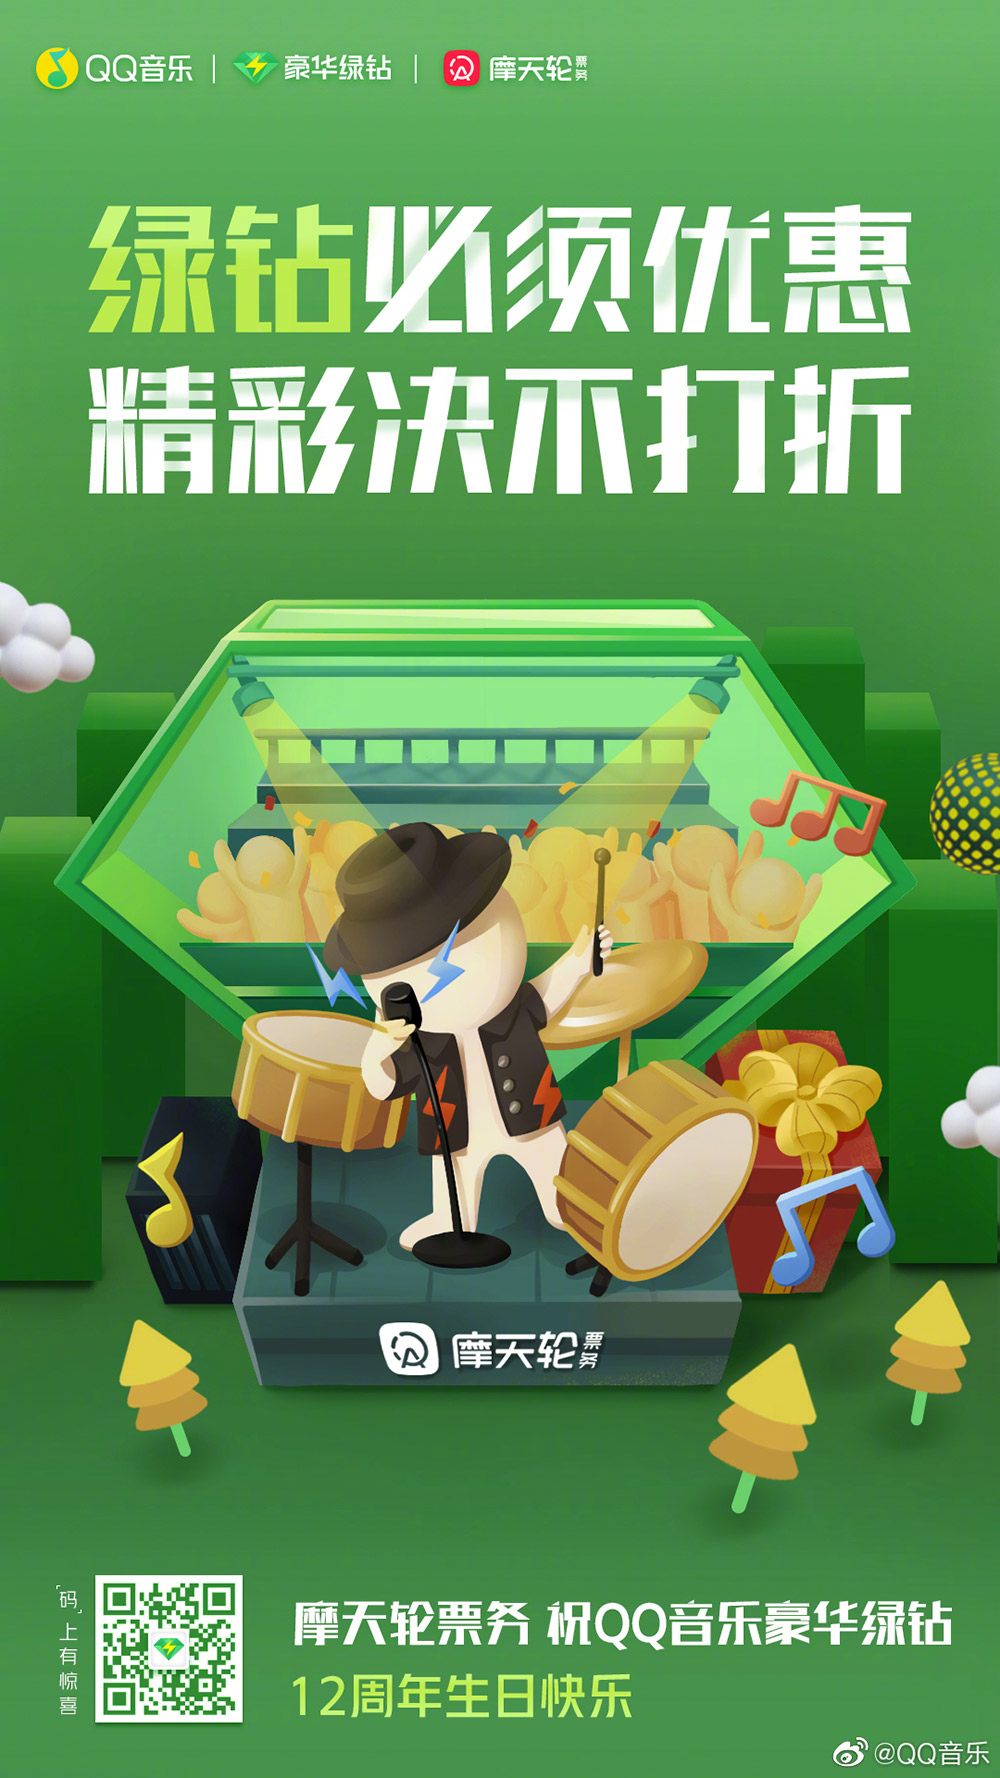 QQ音乐豪华绿钻12周年联合海报!